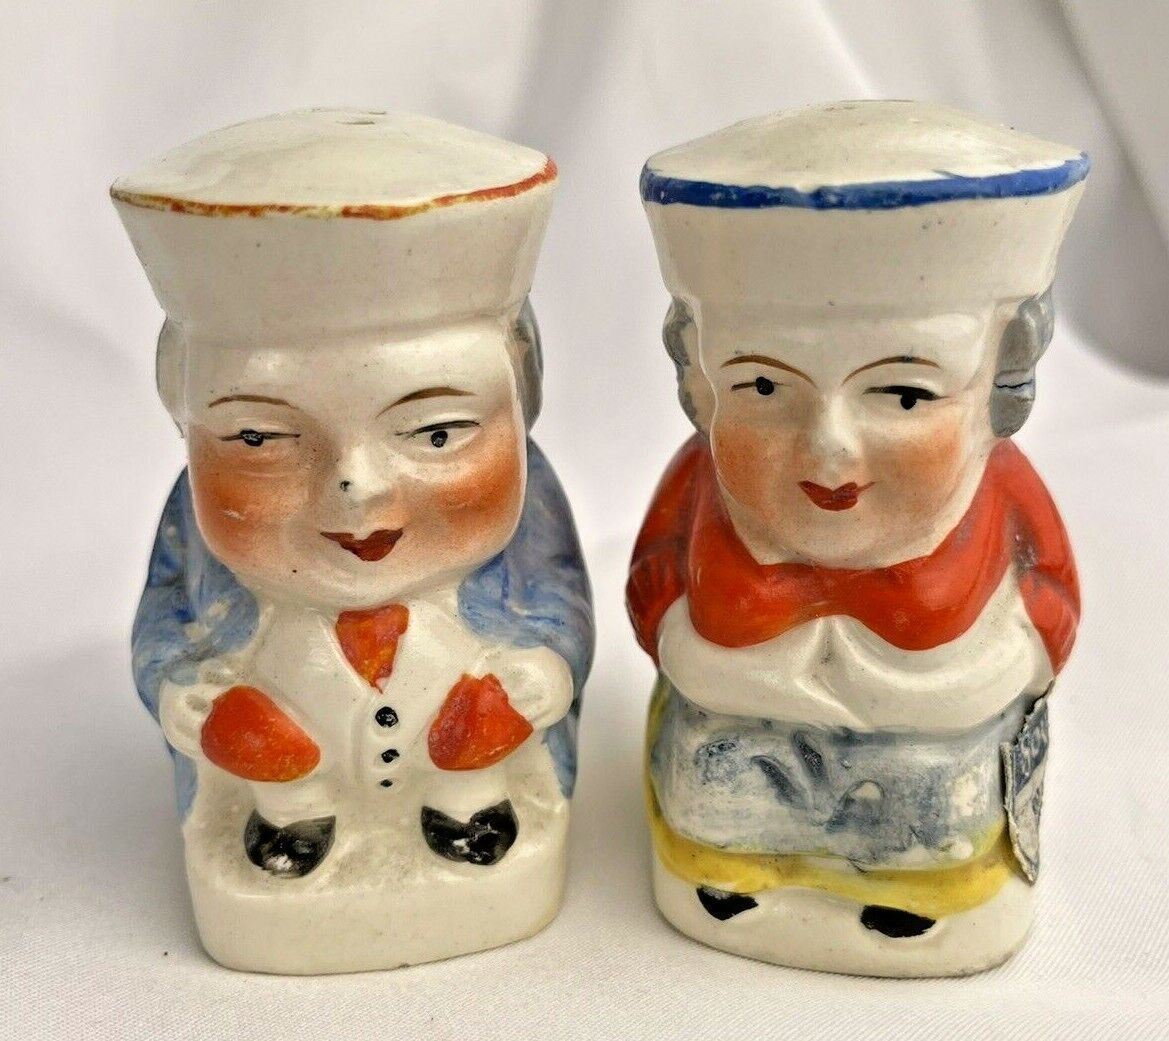 Vintage Japan Royal English Look Man Uniform  Women Salt and Pepper Shakers